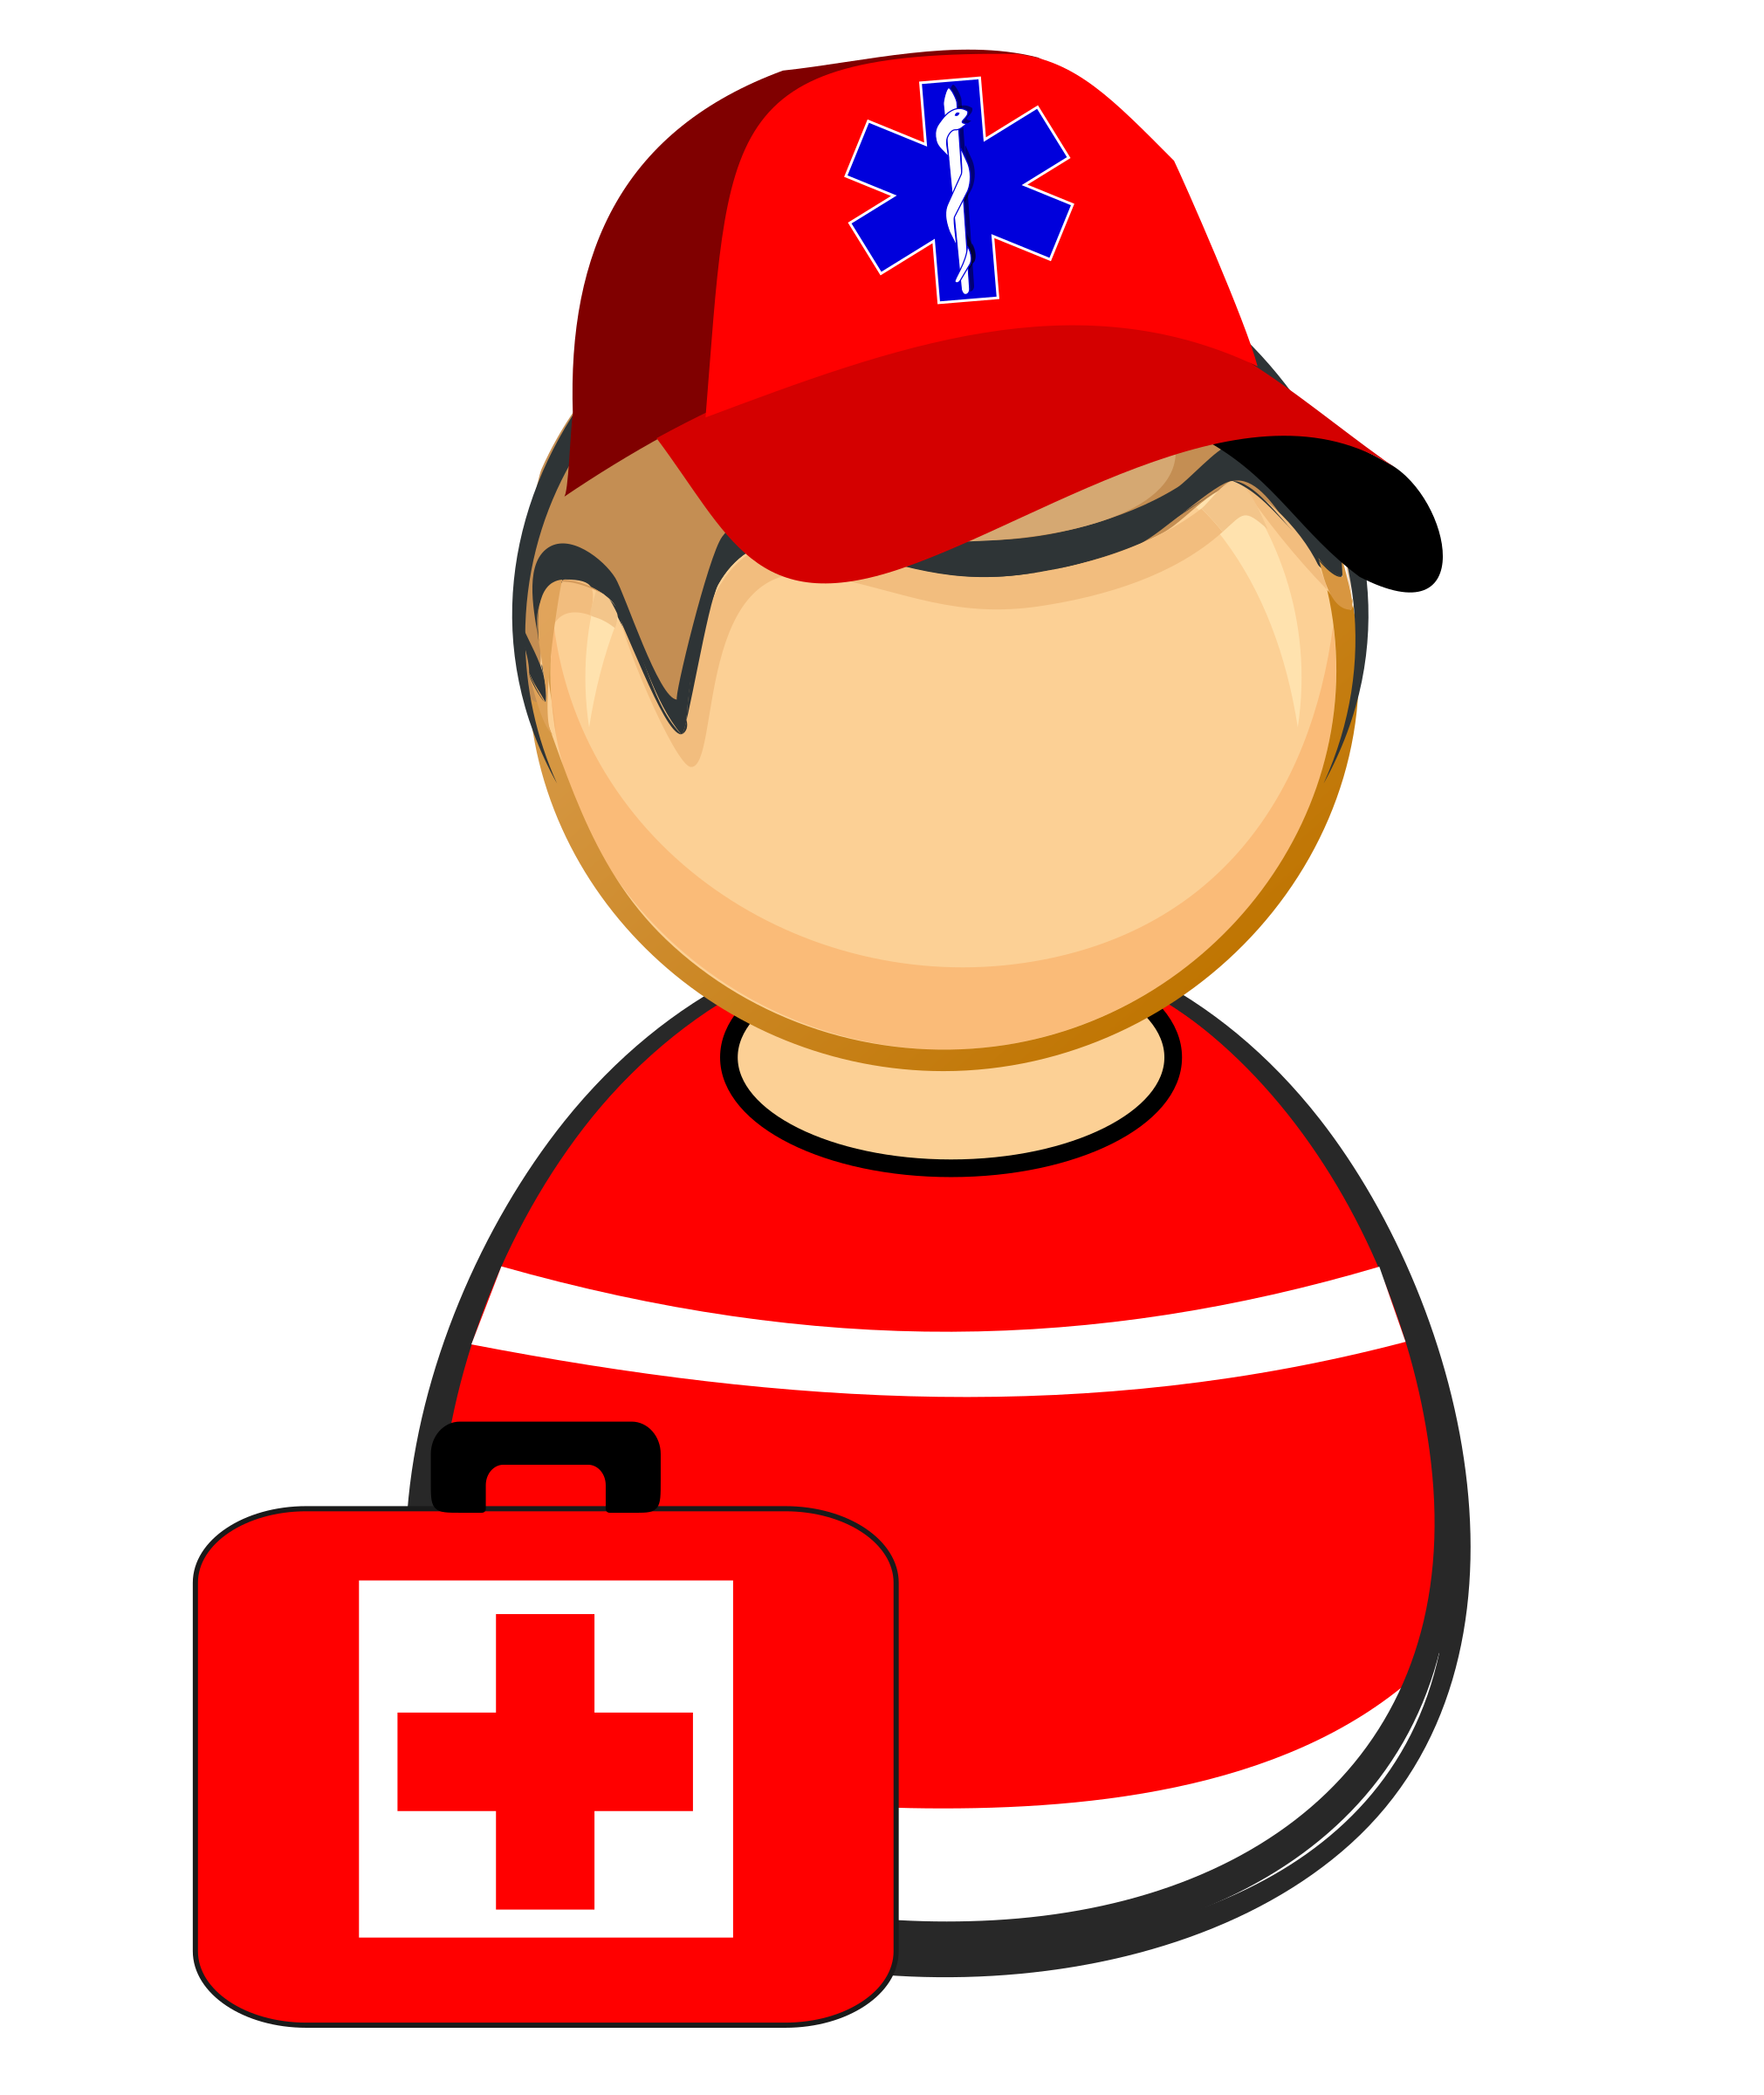 emergency clipart first aid box